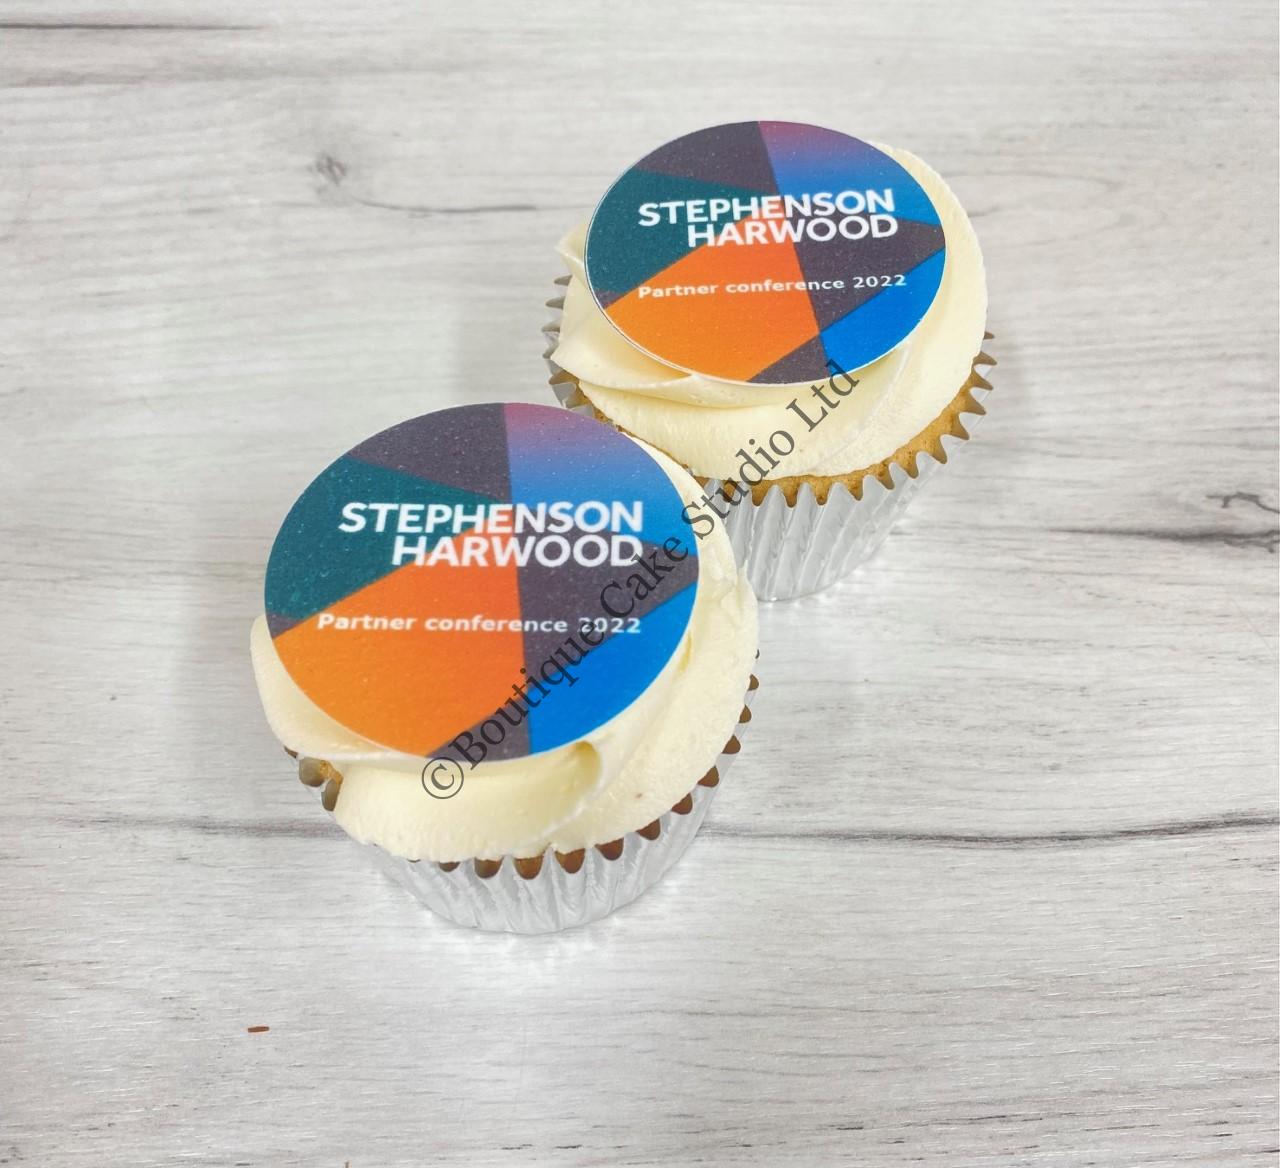 Stephenson Harwood Branded Corporate Cupcakes